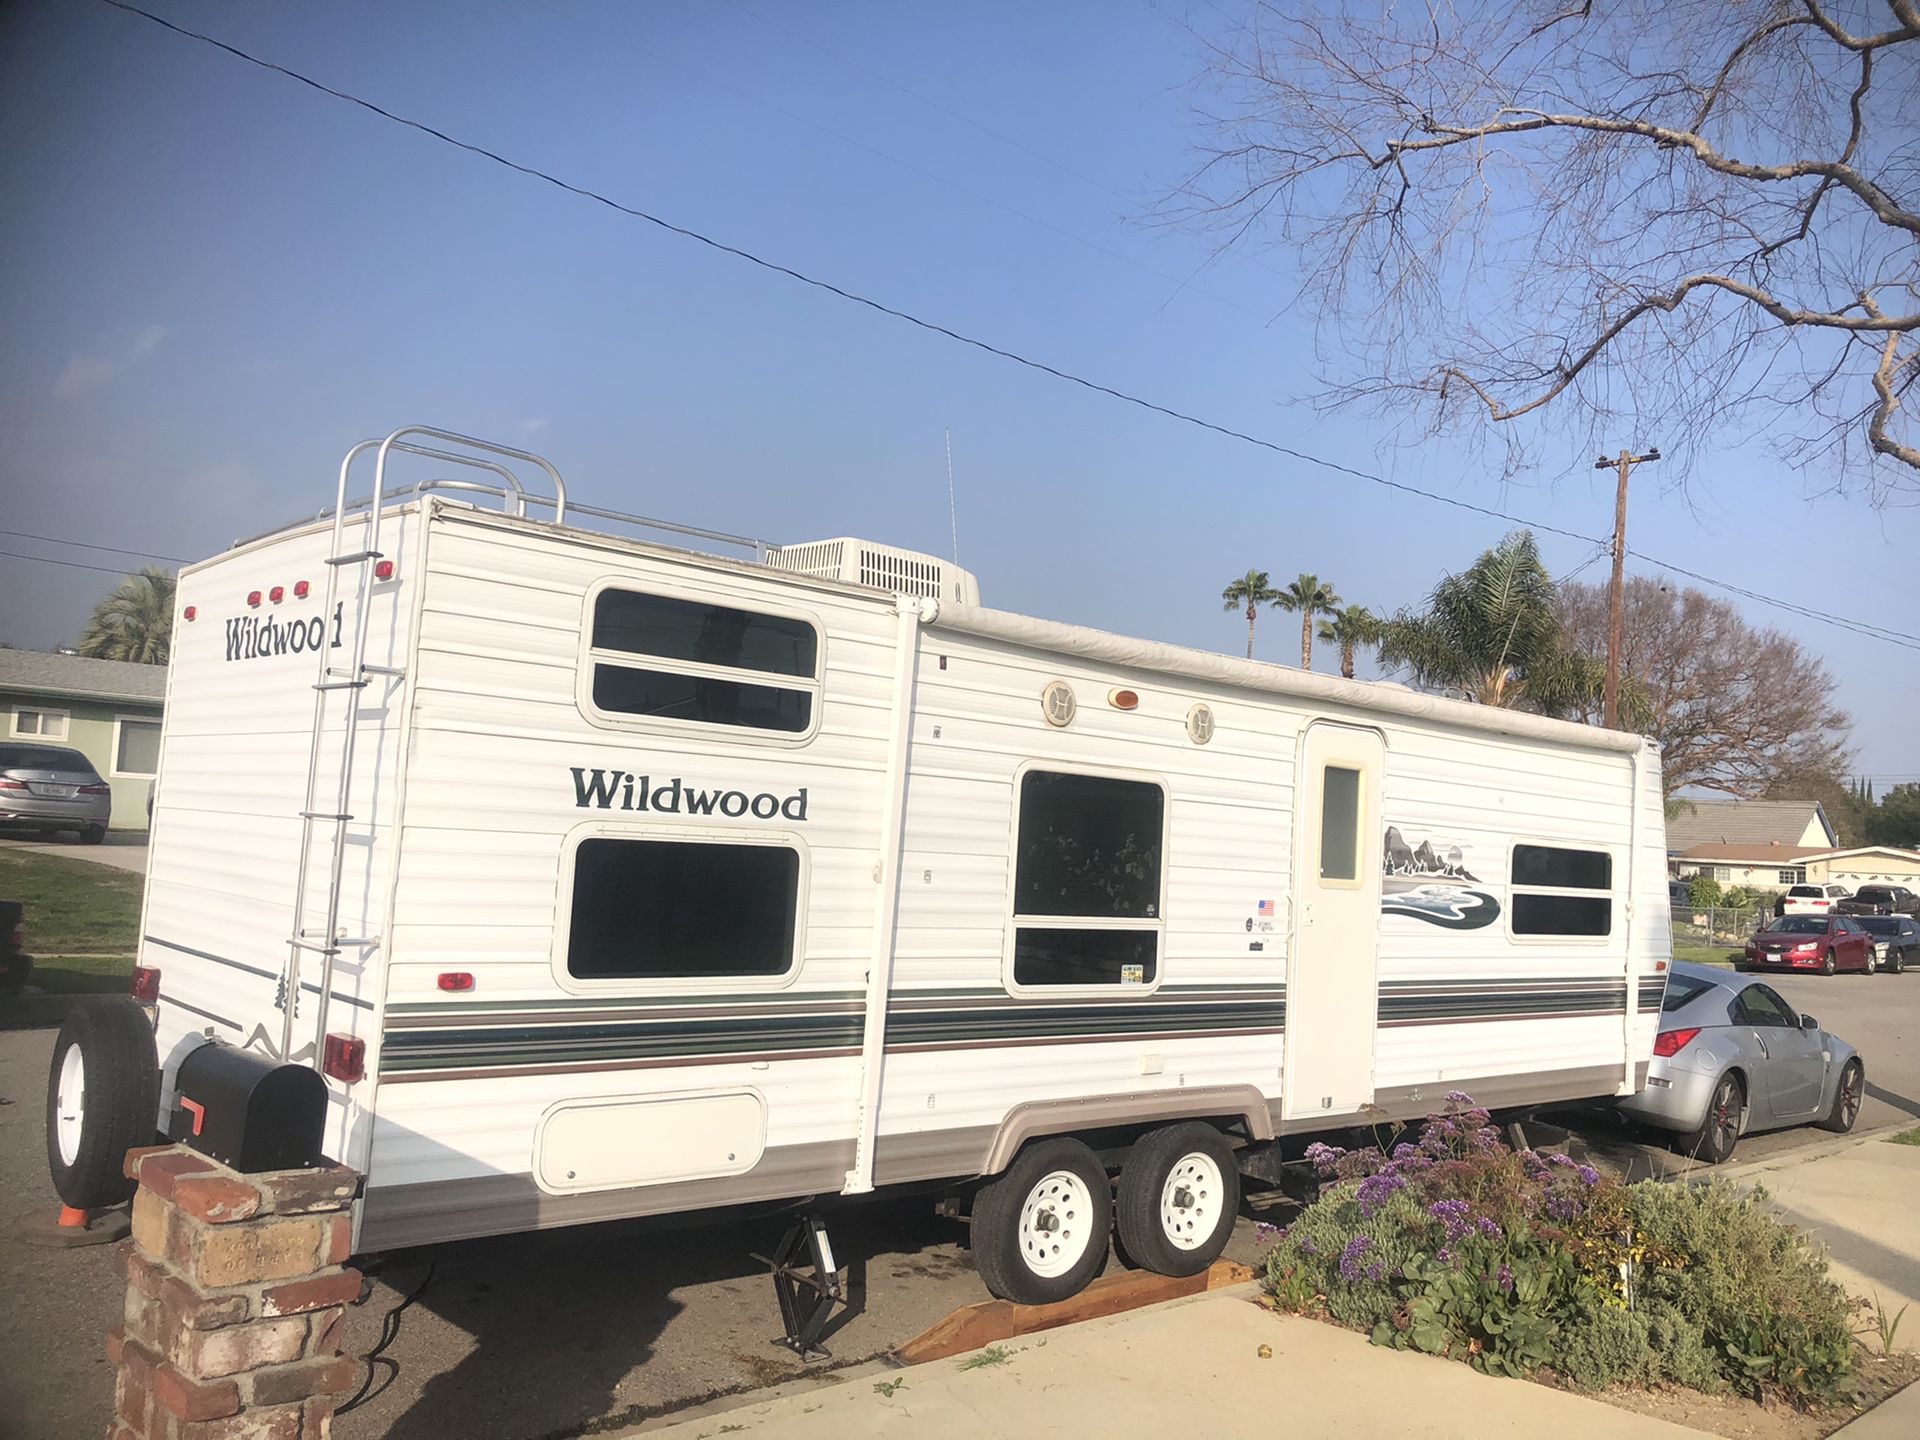 Wildwood 26ft travel trailer